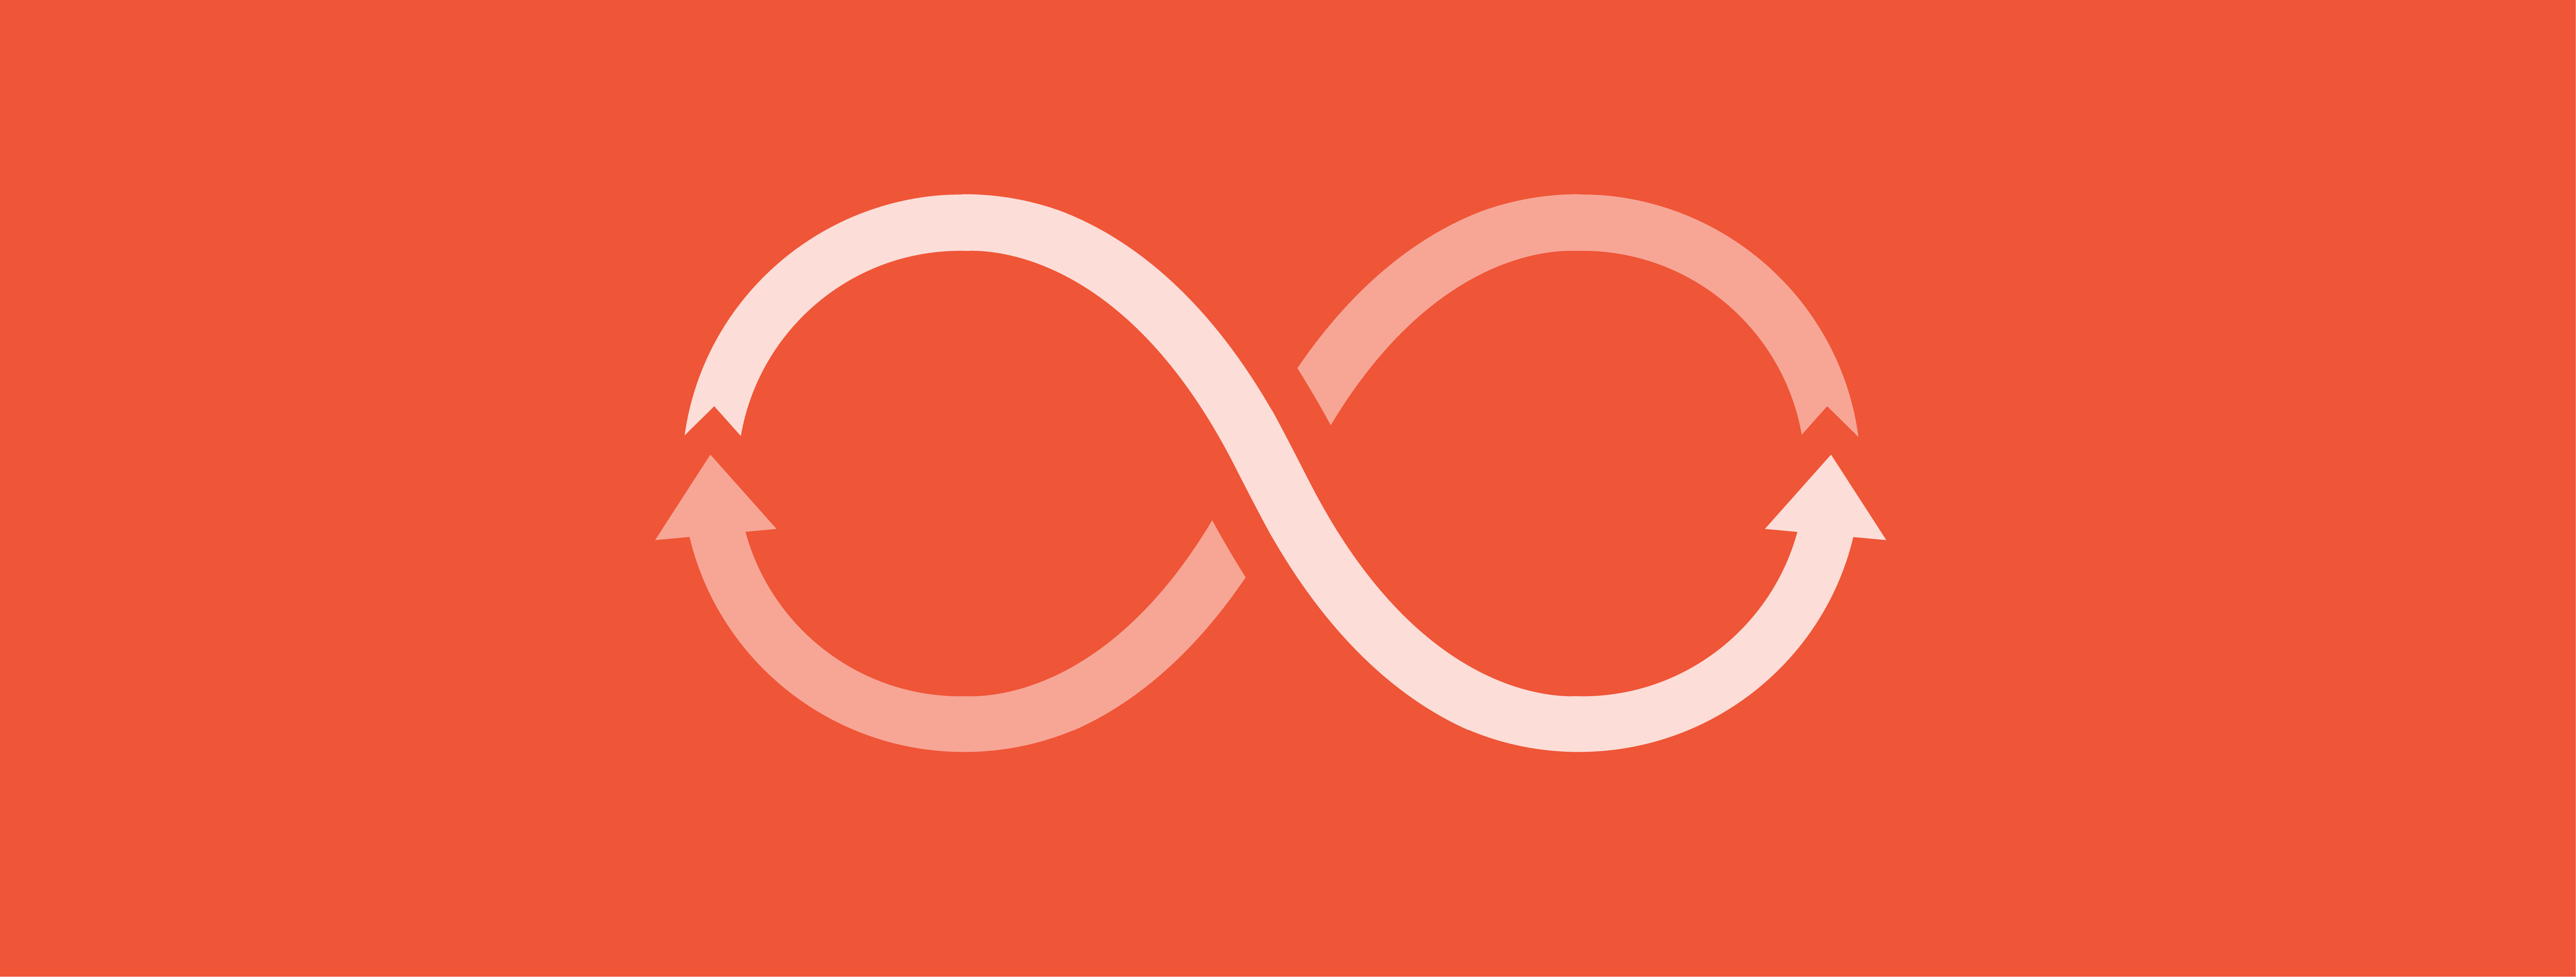 better-design-feedback-infinite-loop